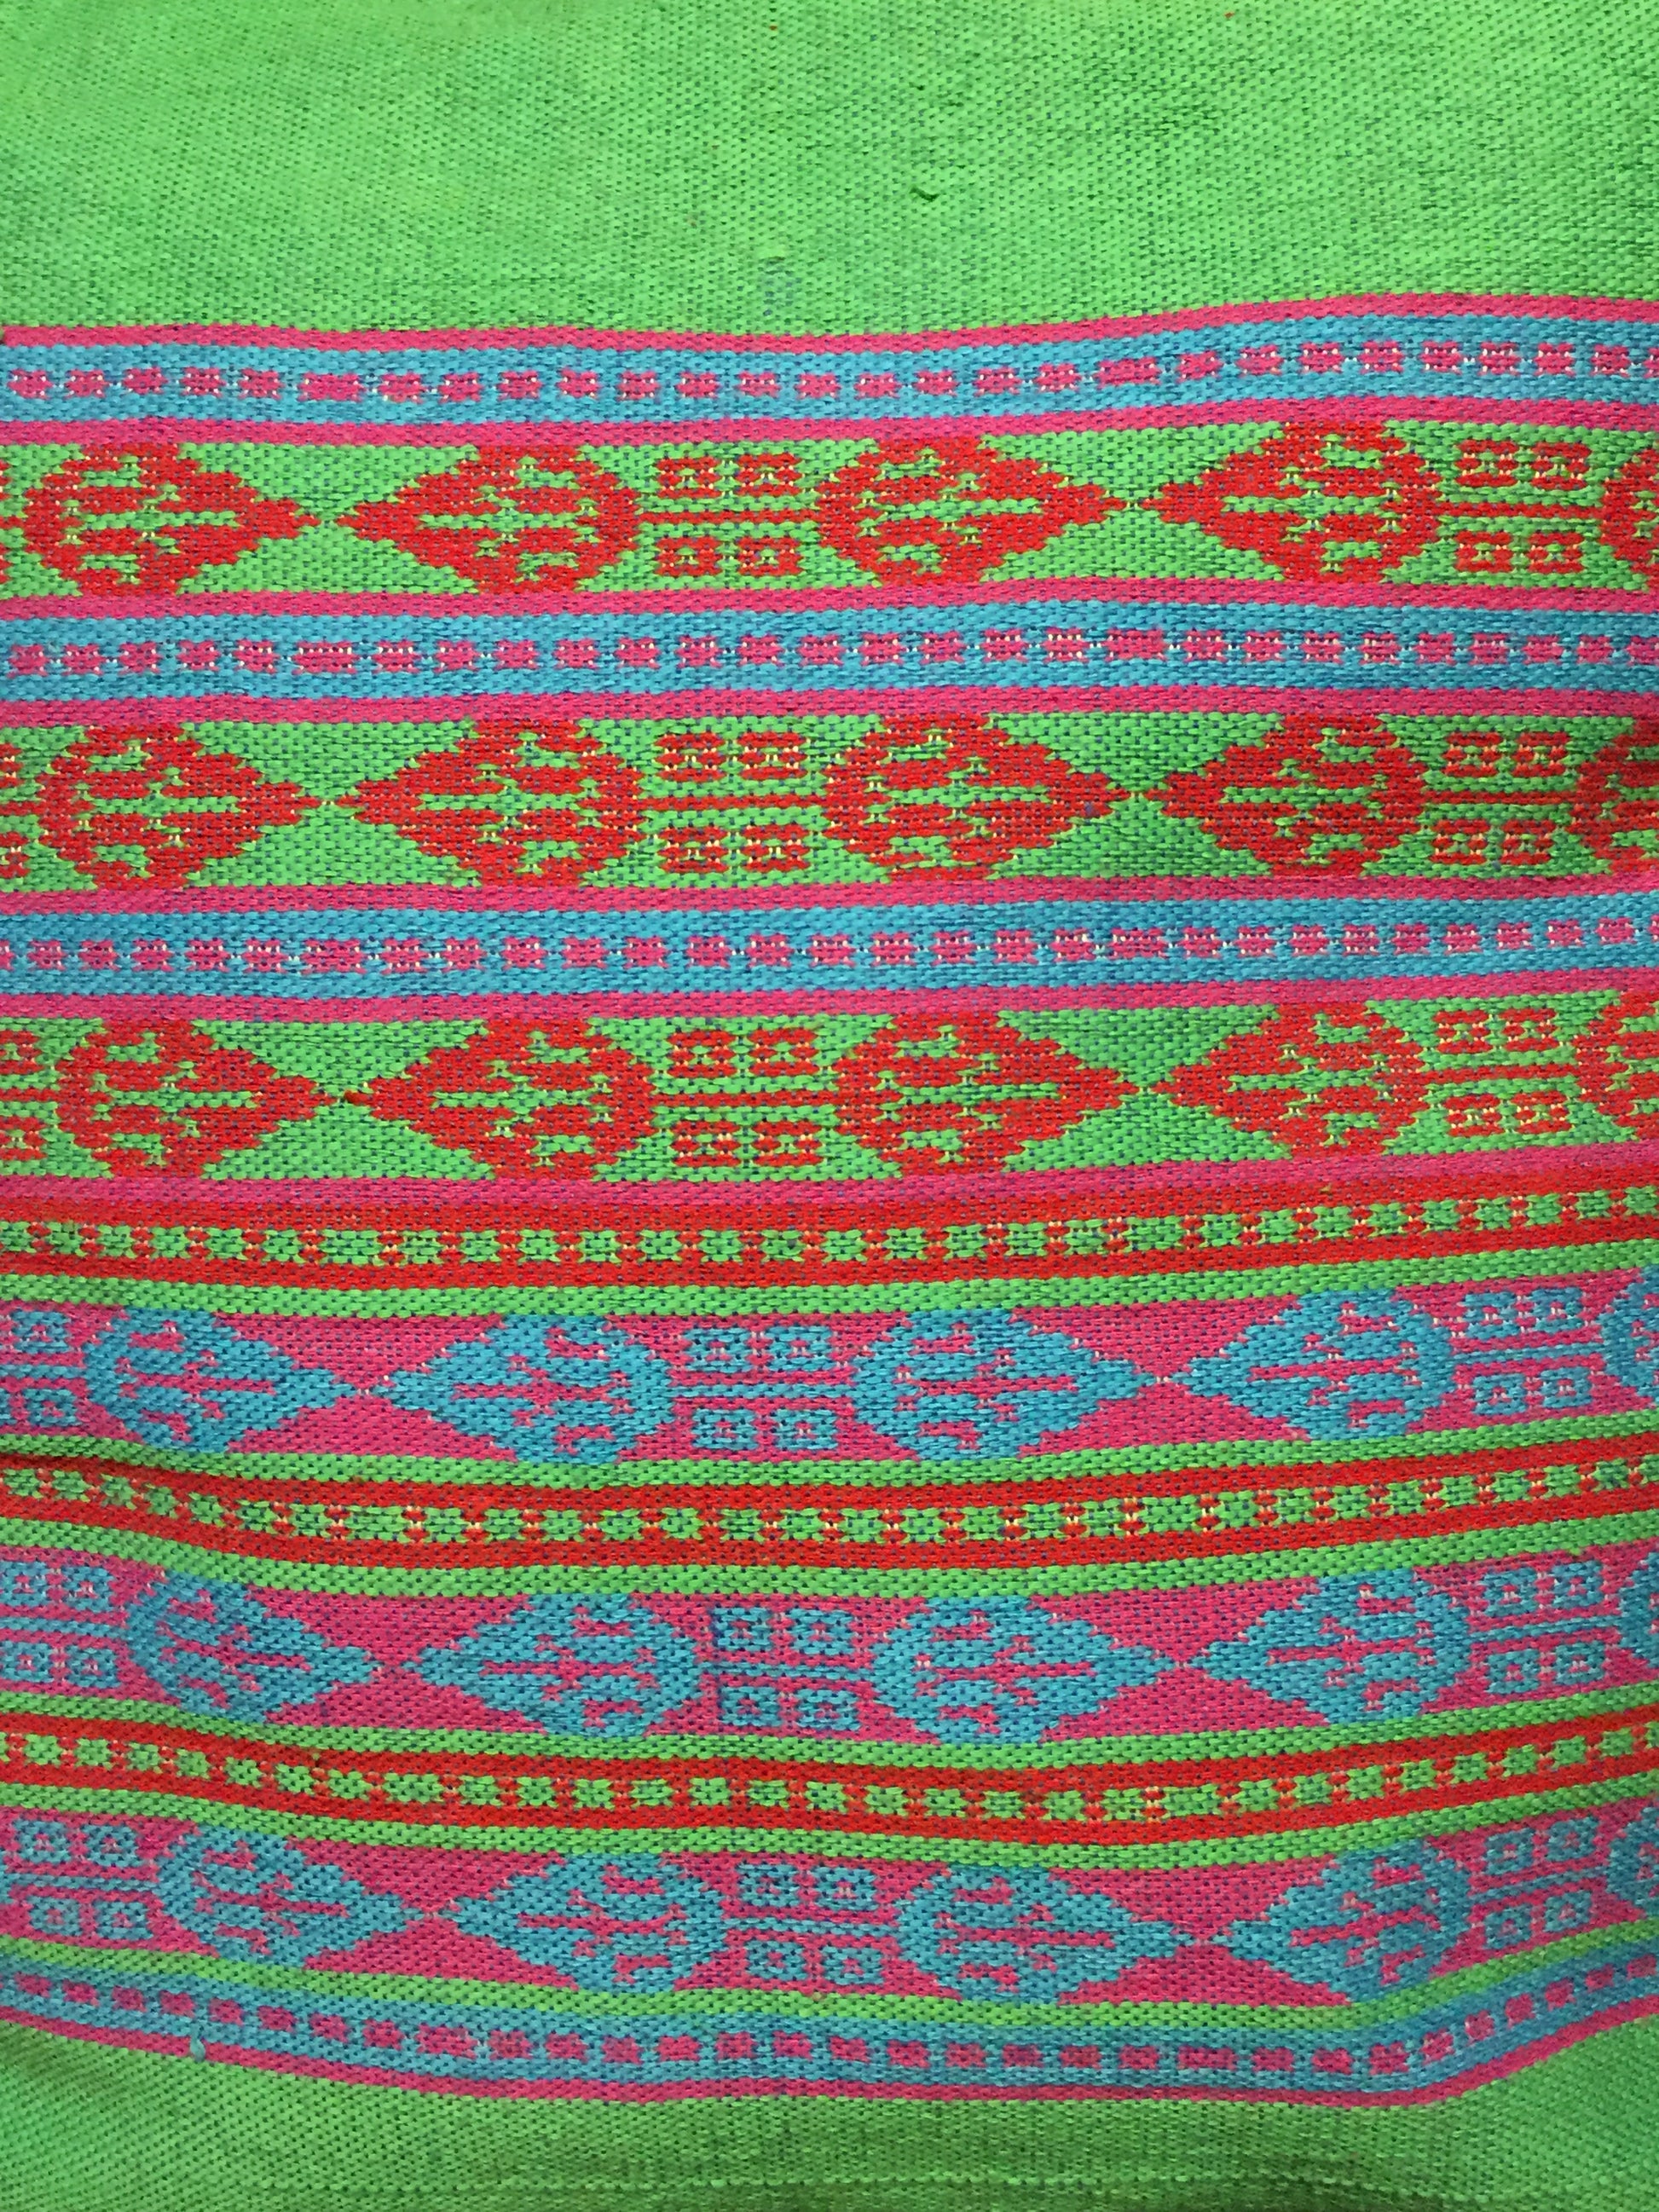 Handwoven Egyptian Cotton Cushion Cover - Paisley Motif - Dandarah